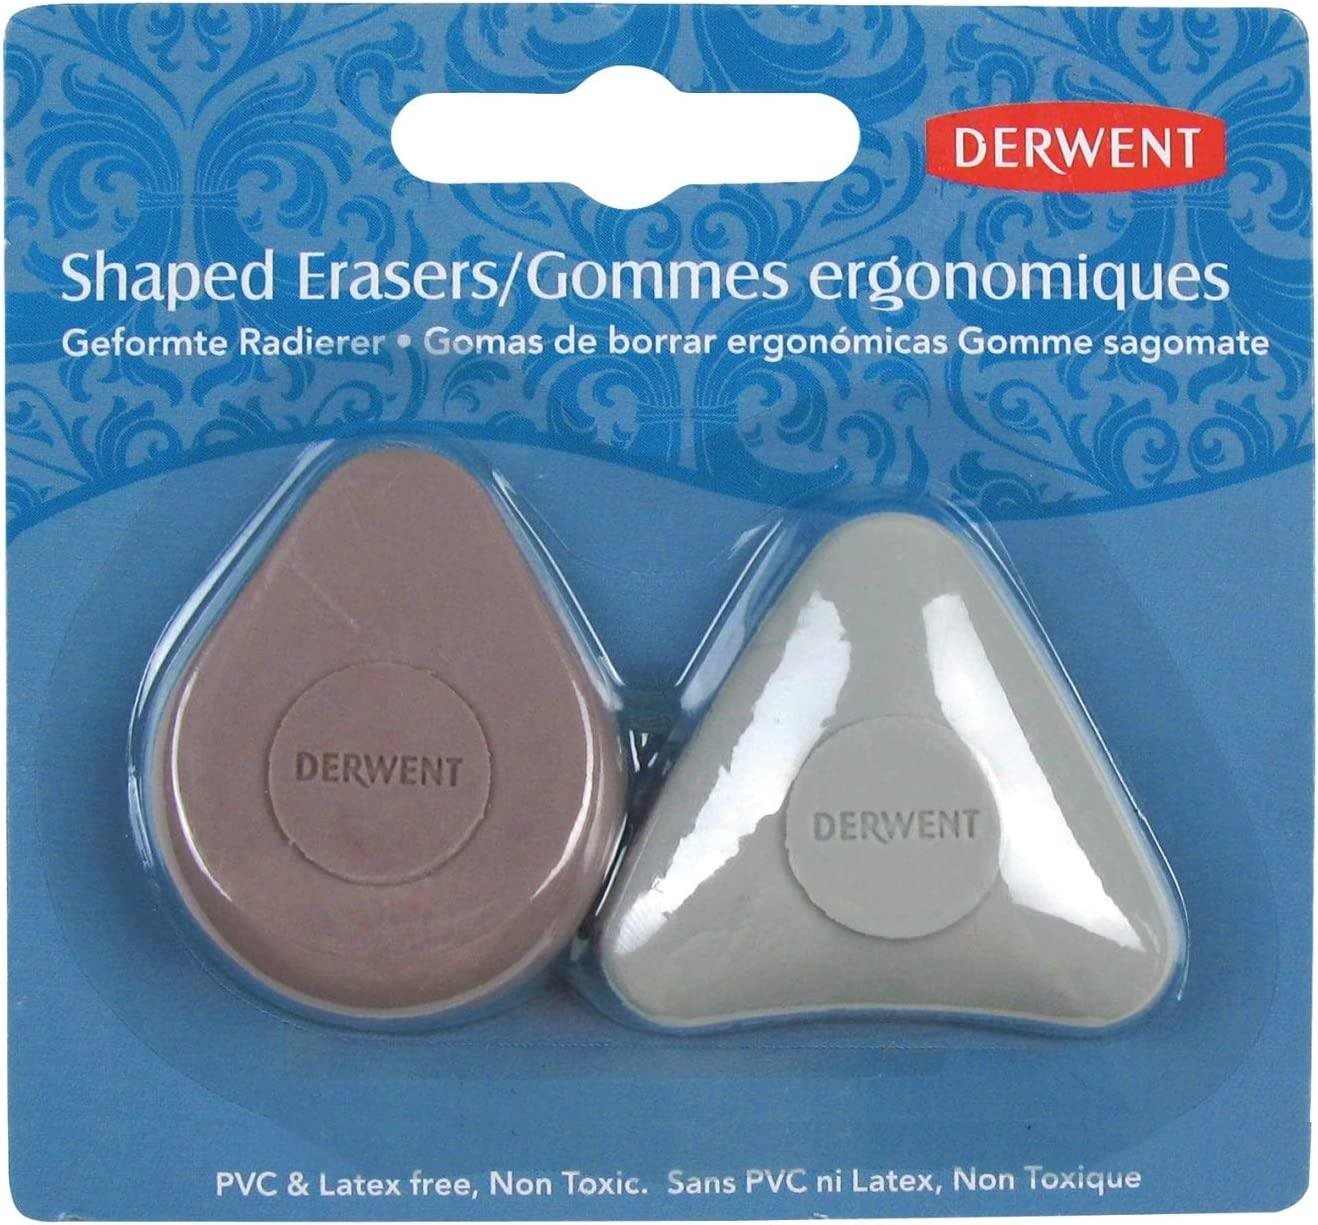 DERWENT Shaped Erasers - 2 db-os kiszerelés